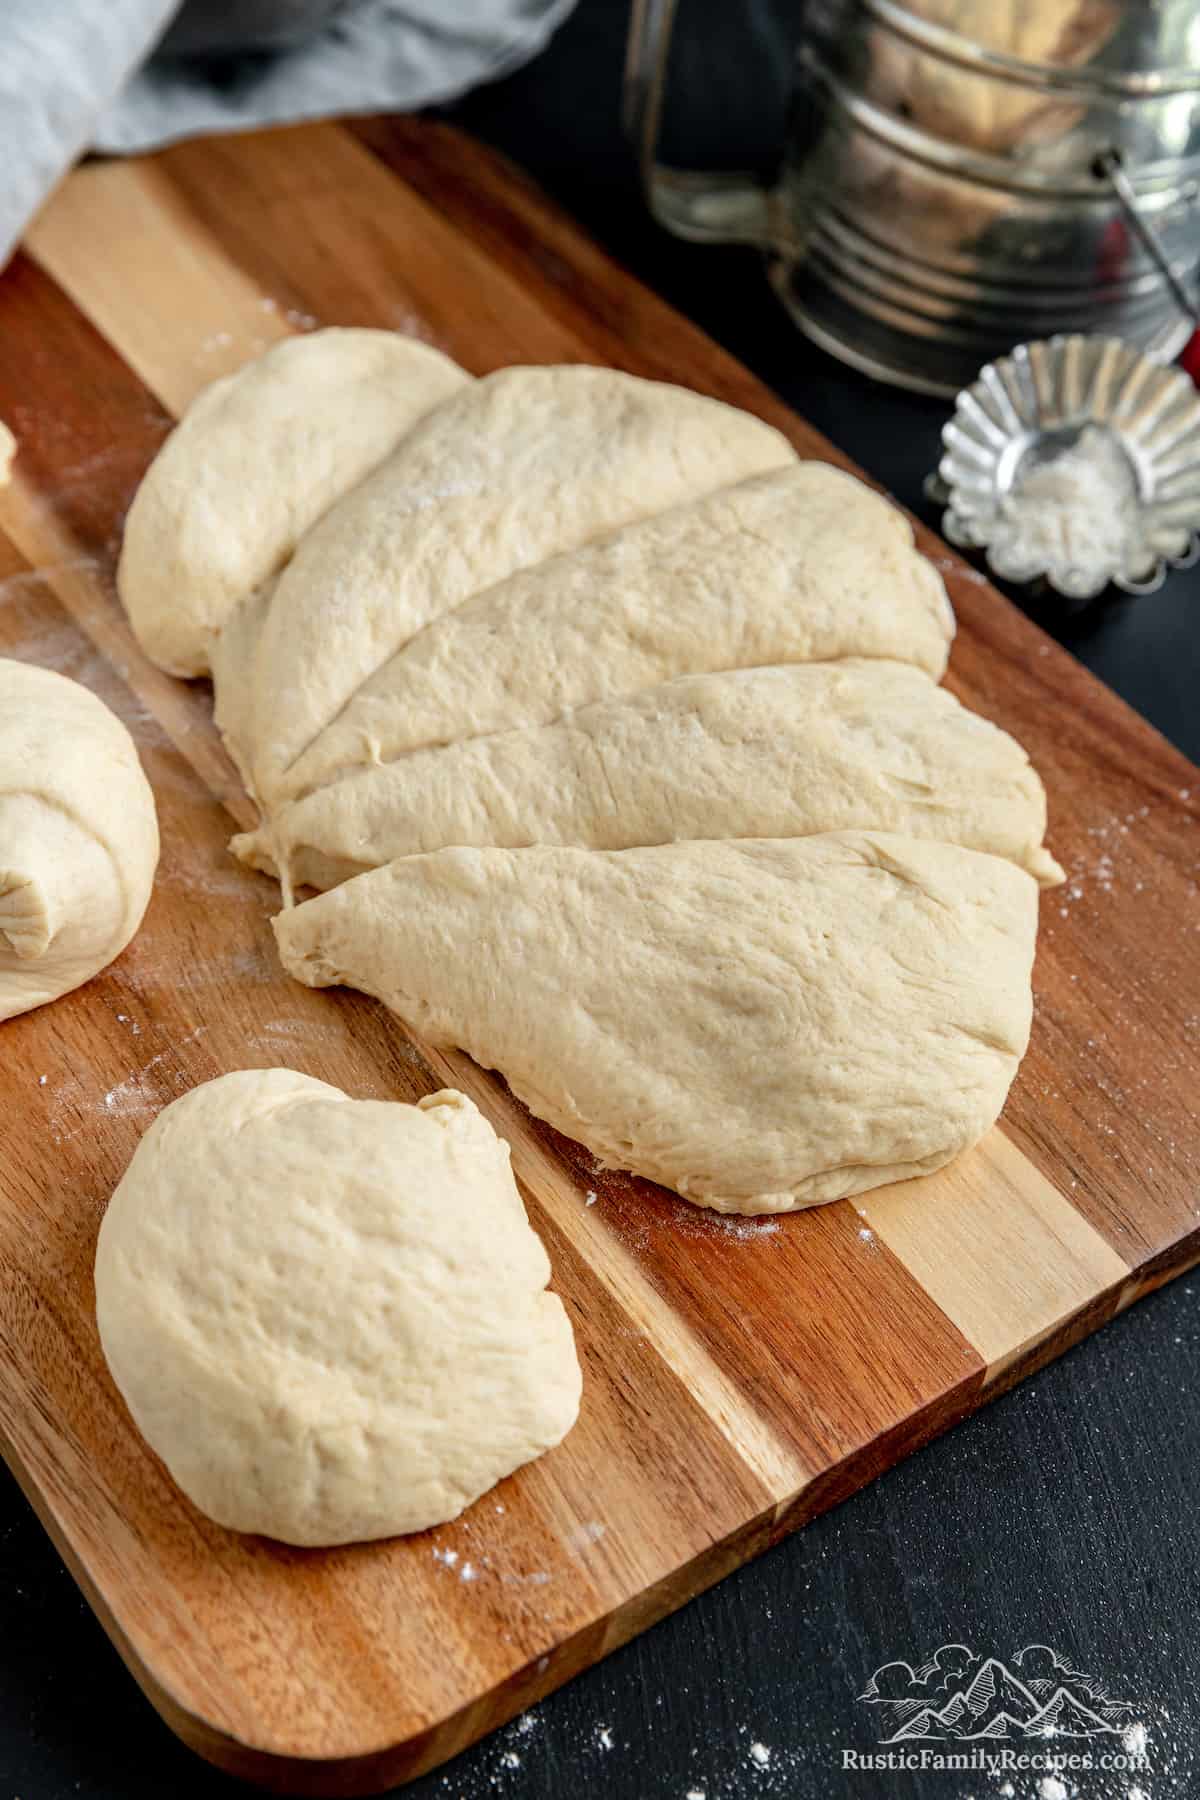 Bolillo dough cut into 8 pieces